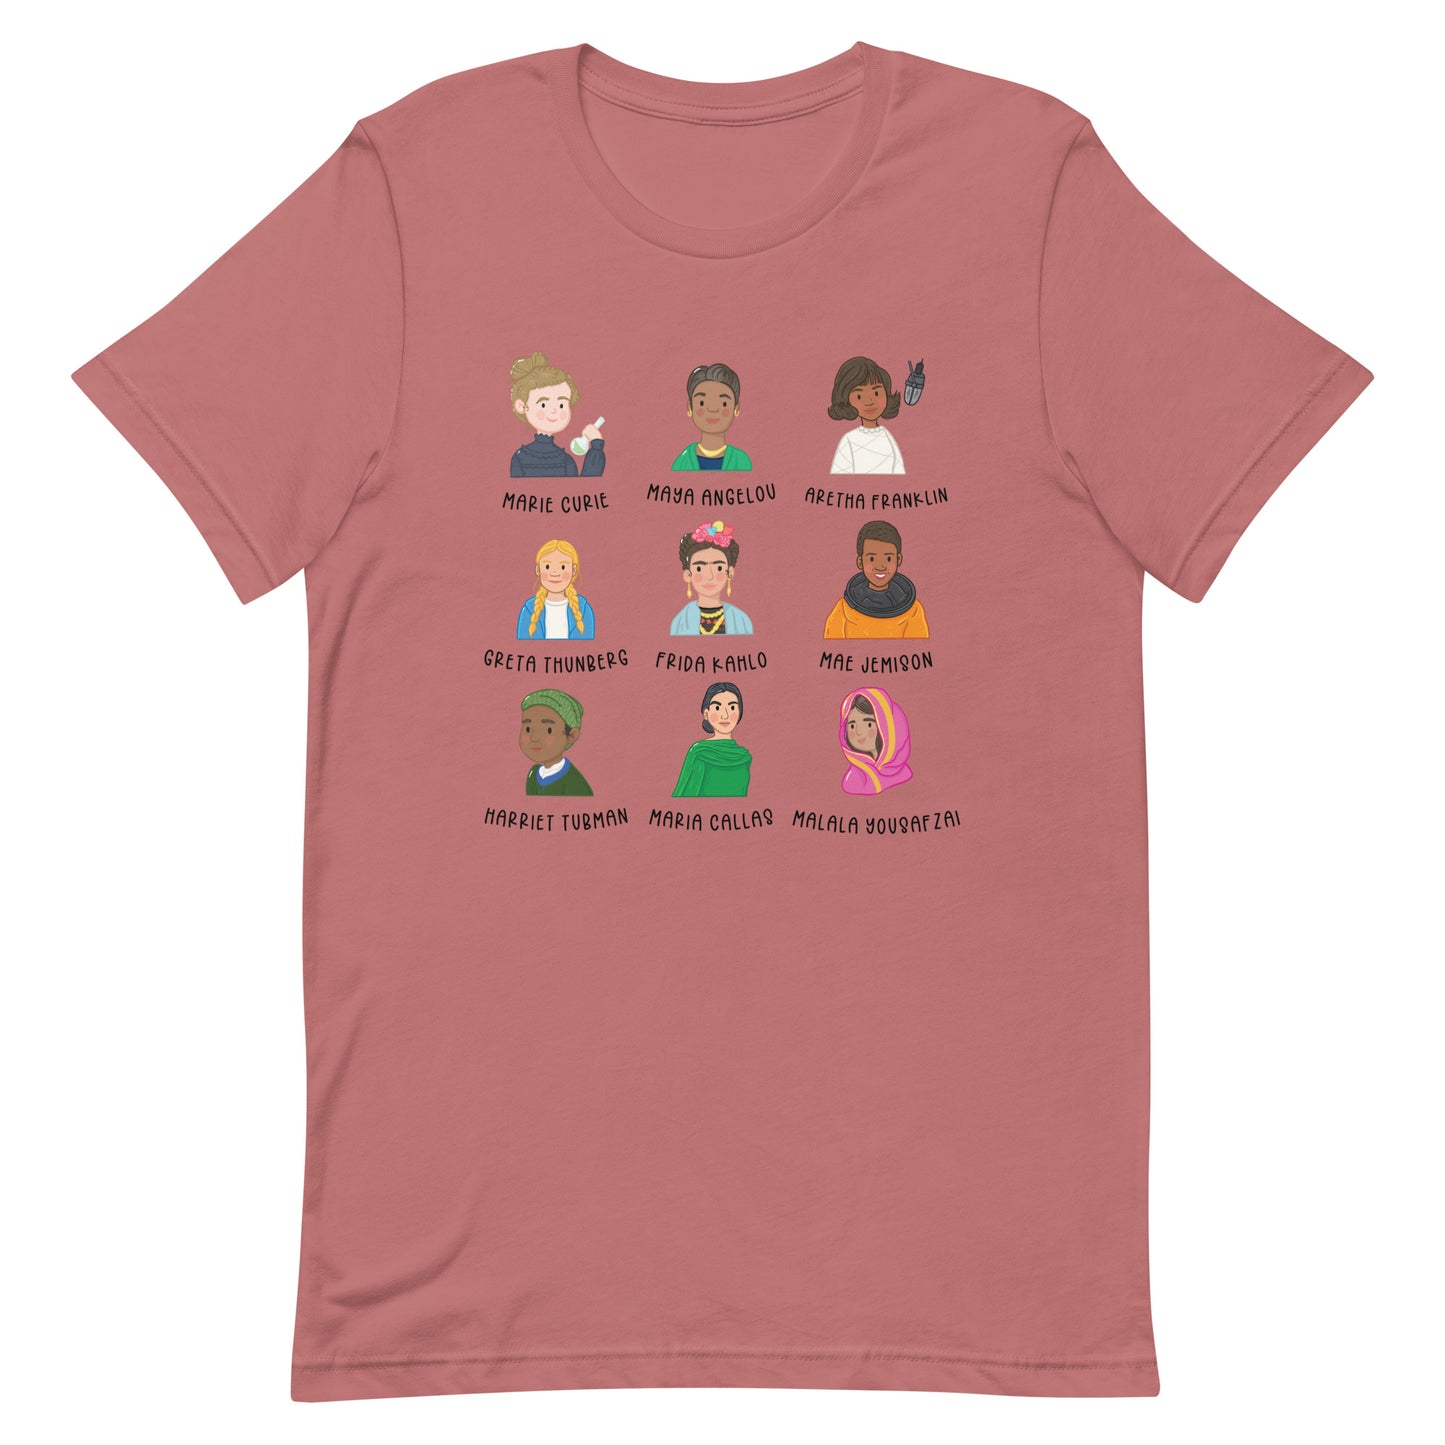 Women's History Month Short Sleeve T-shirt